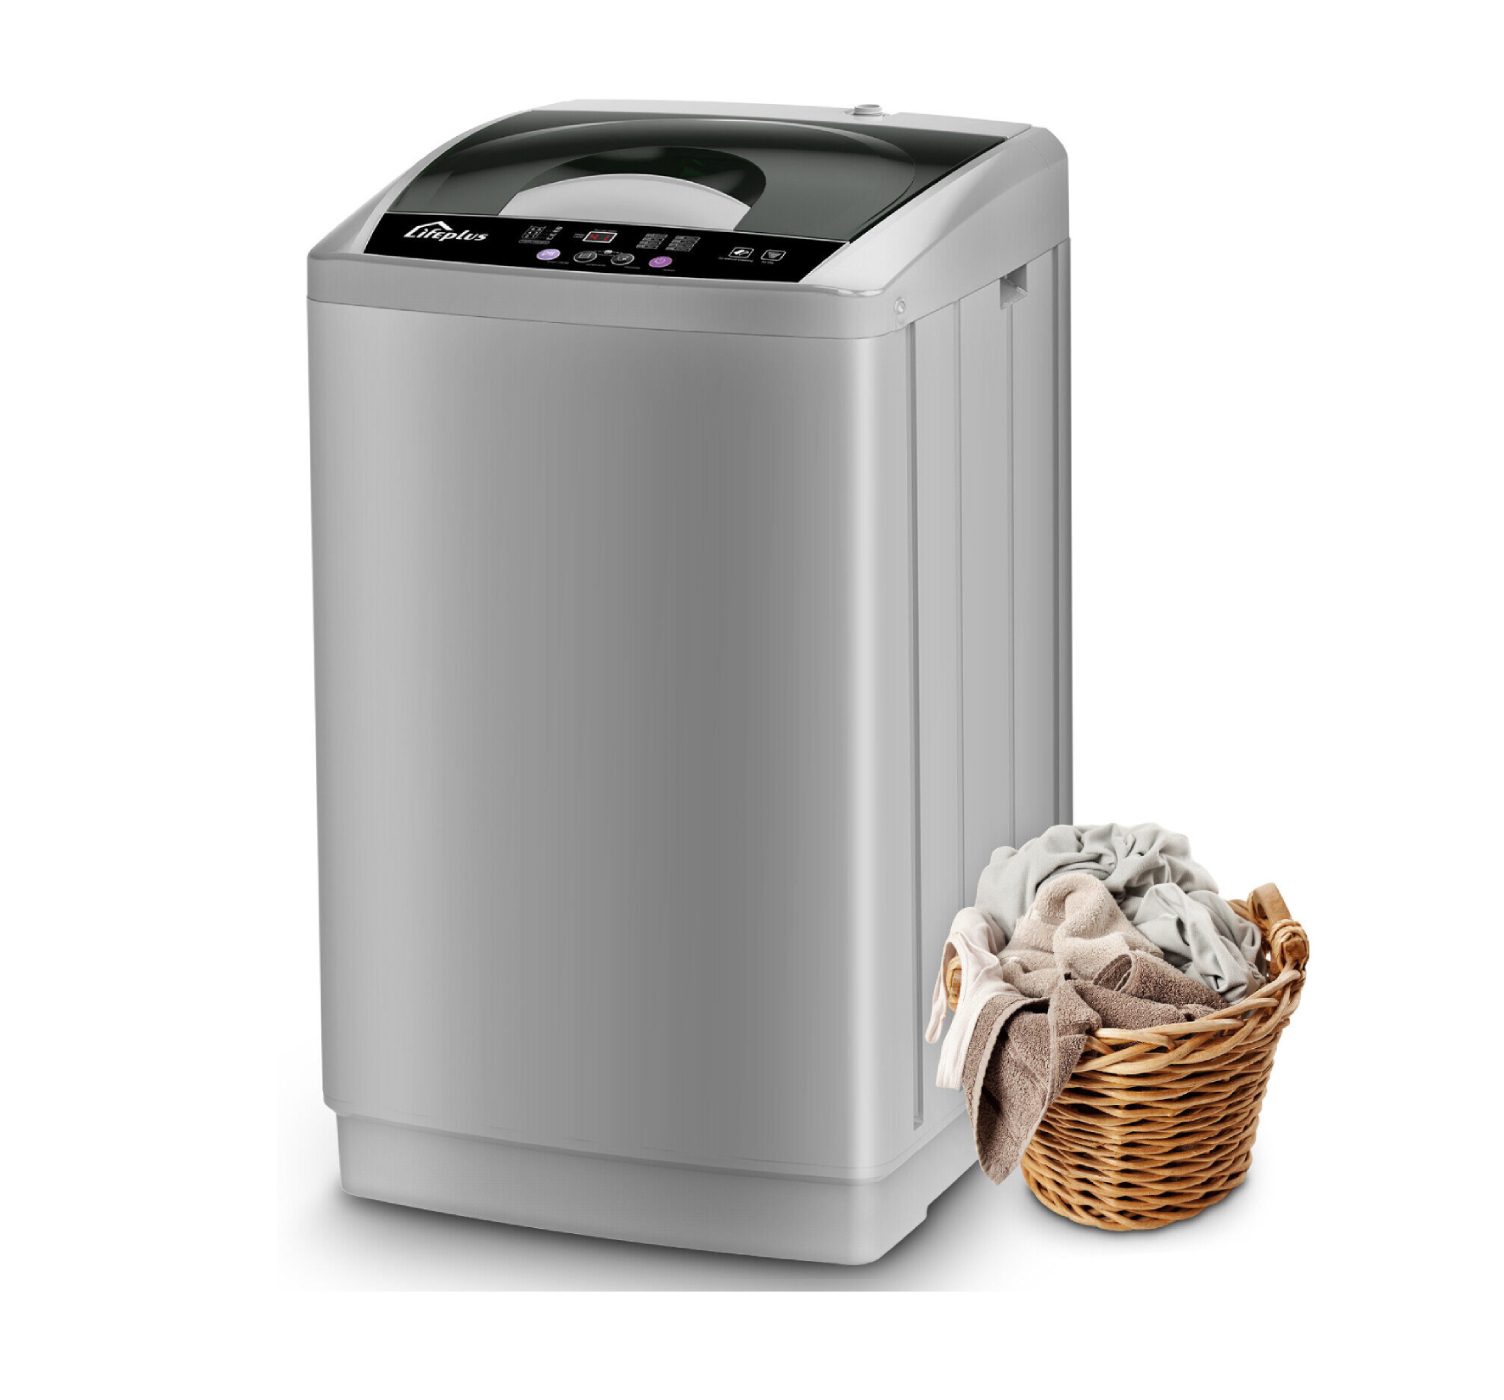 lifeplus portable washing machine